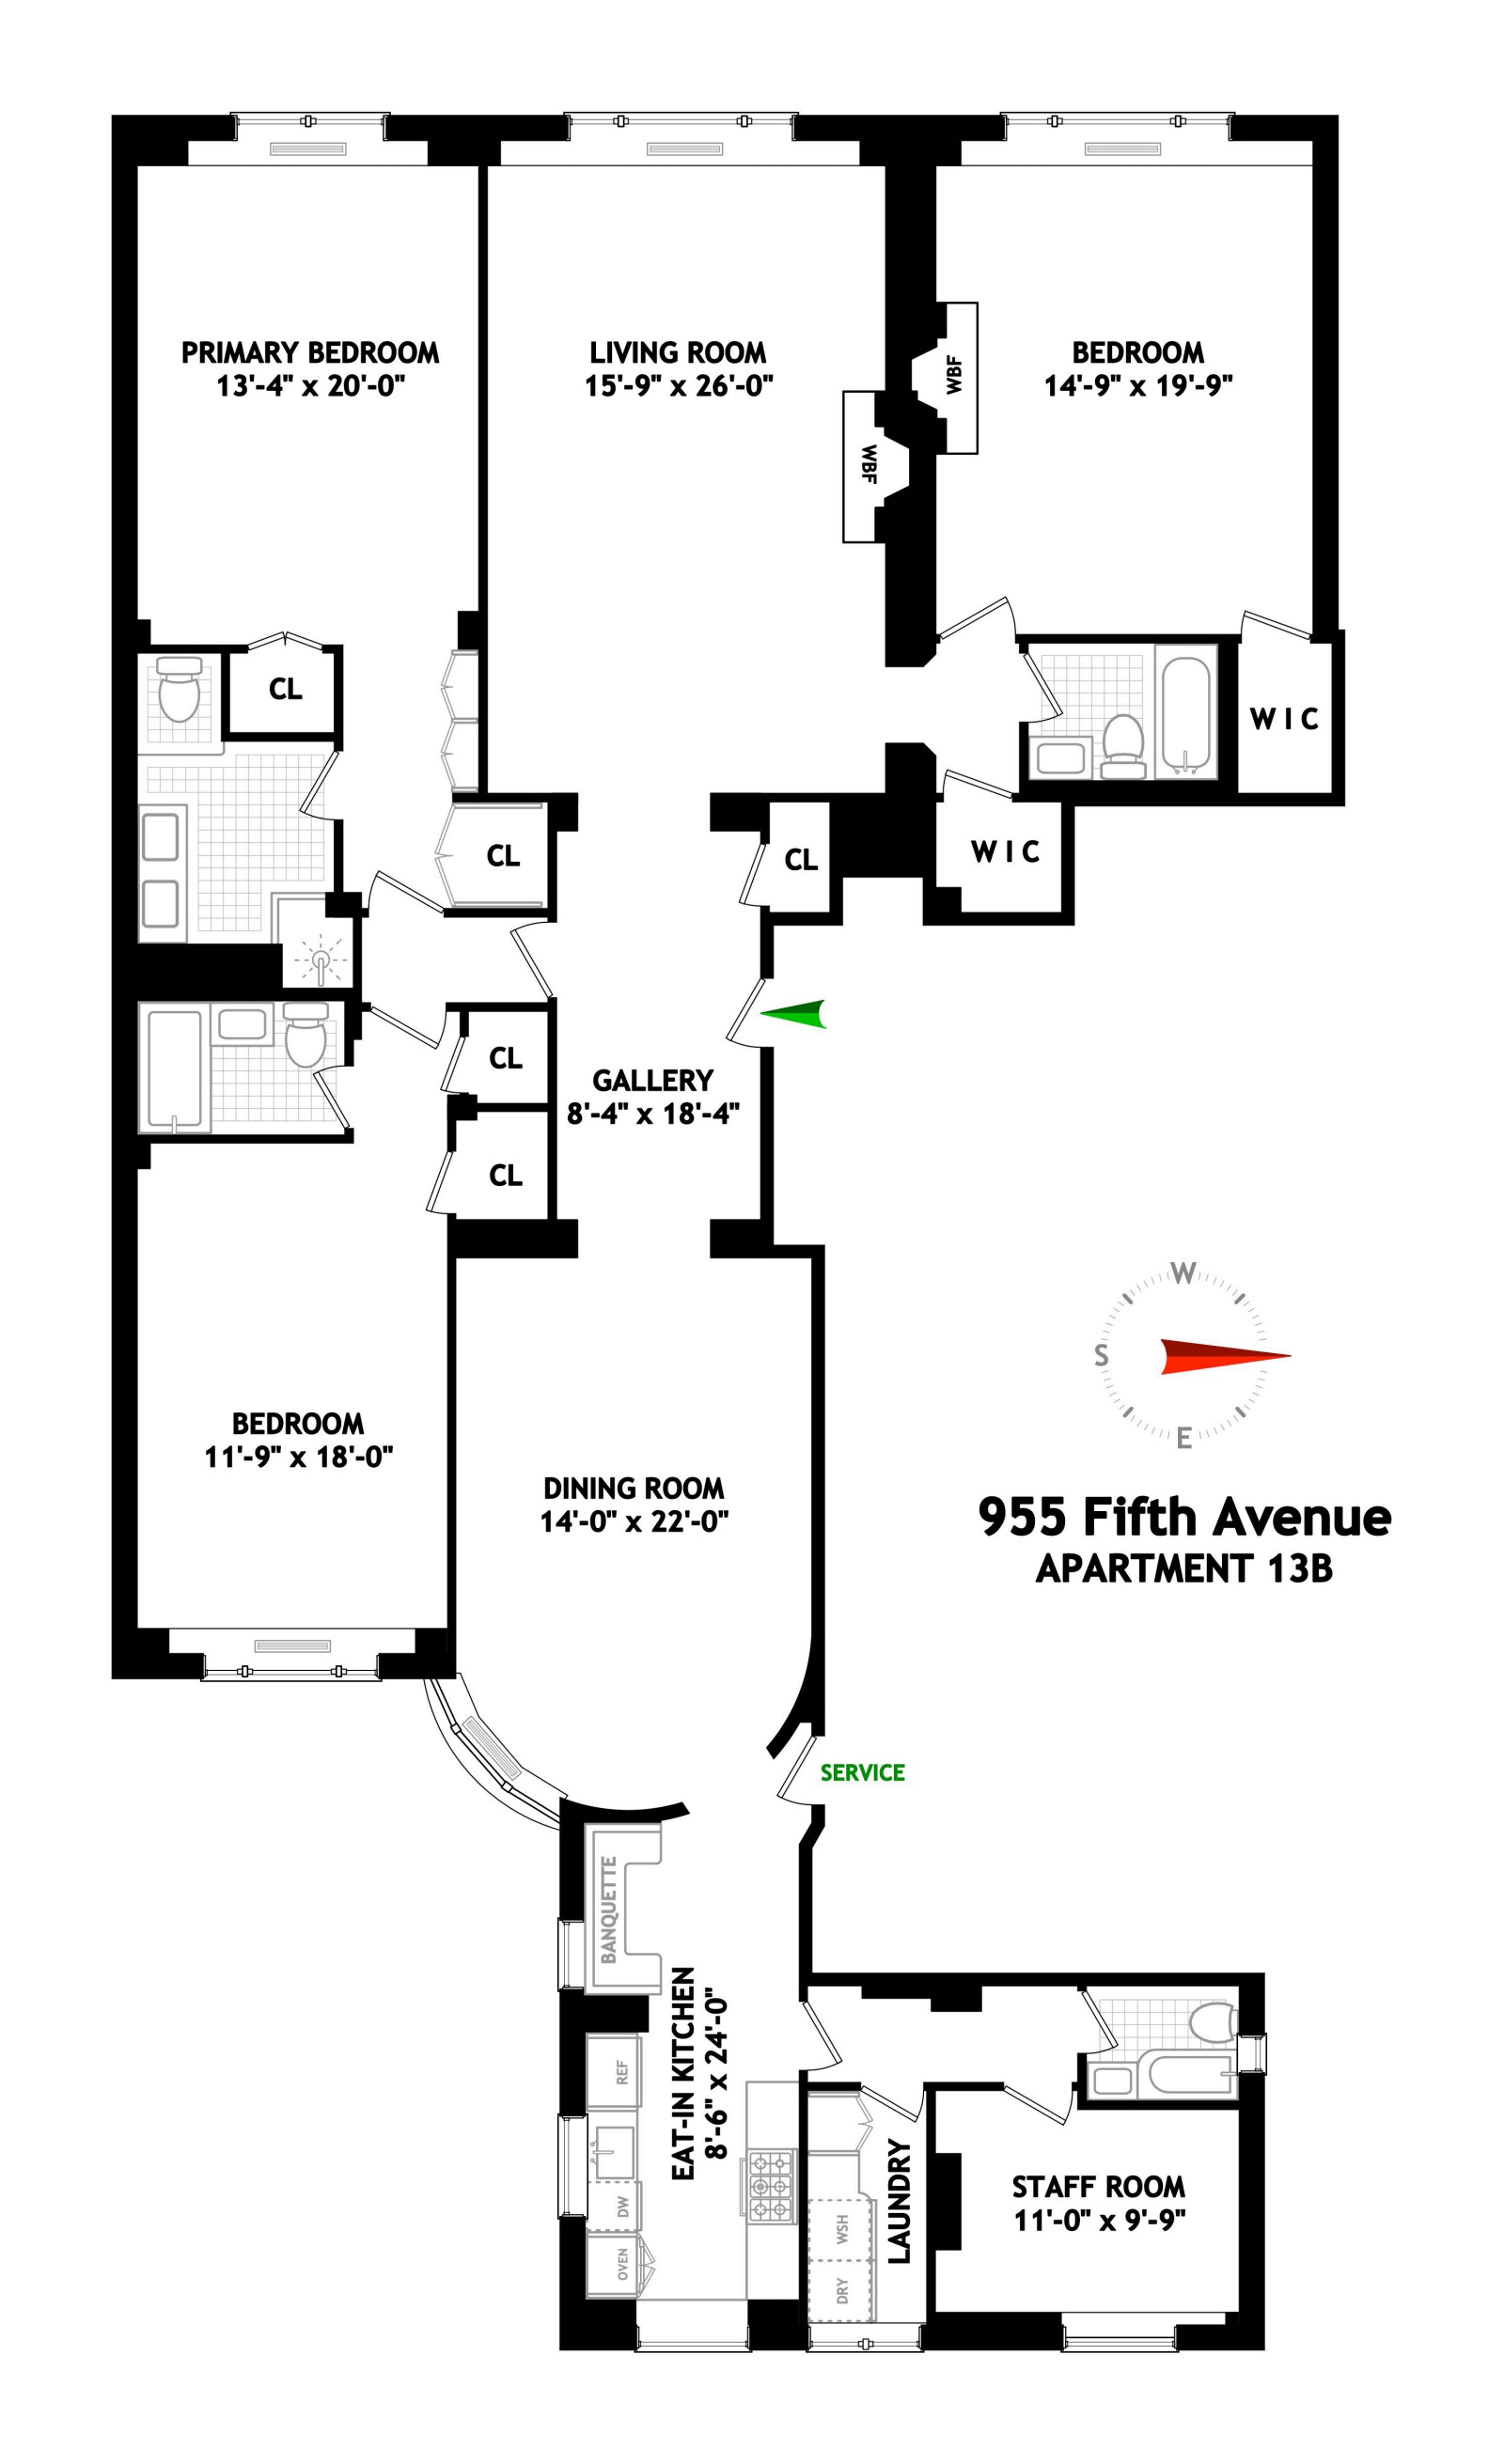 Floorplan for 955 Fifth Avenue, 13B